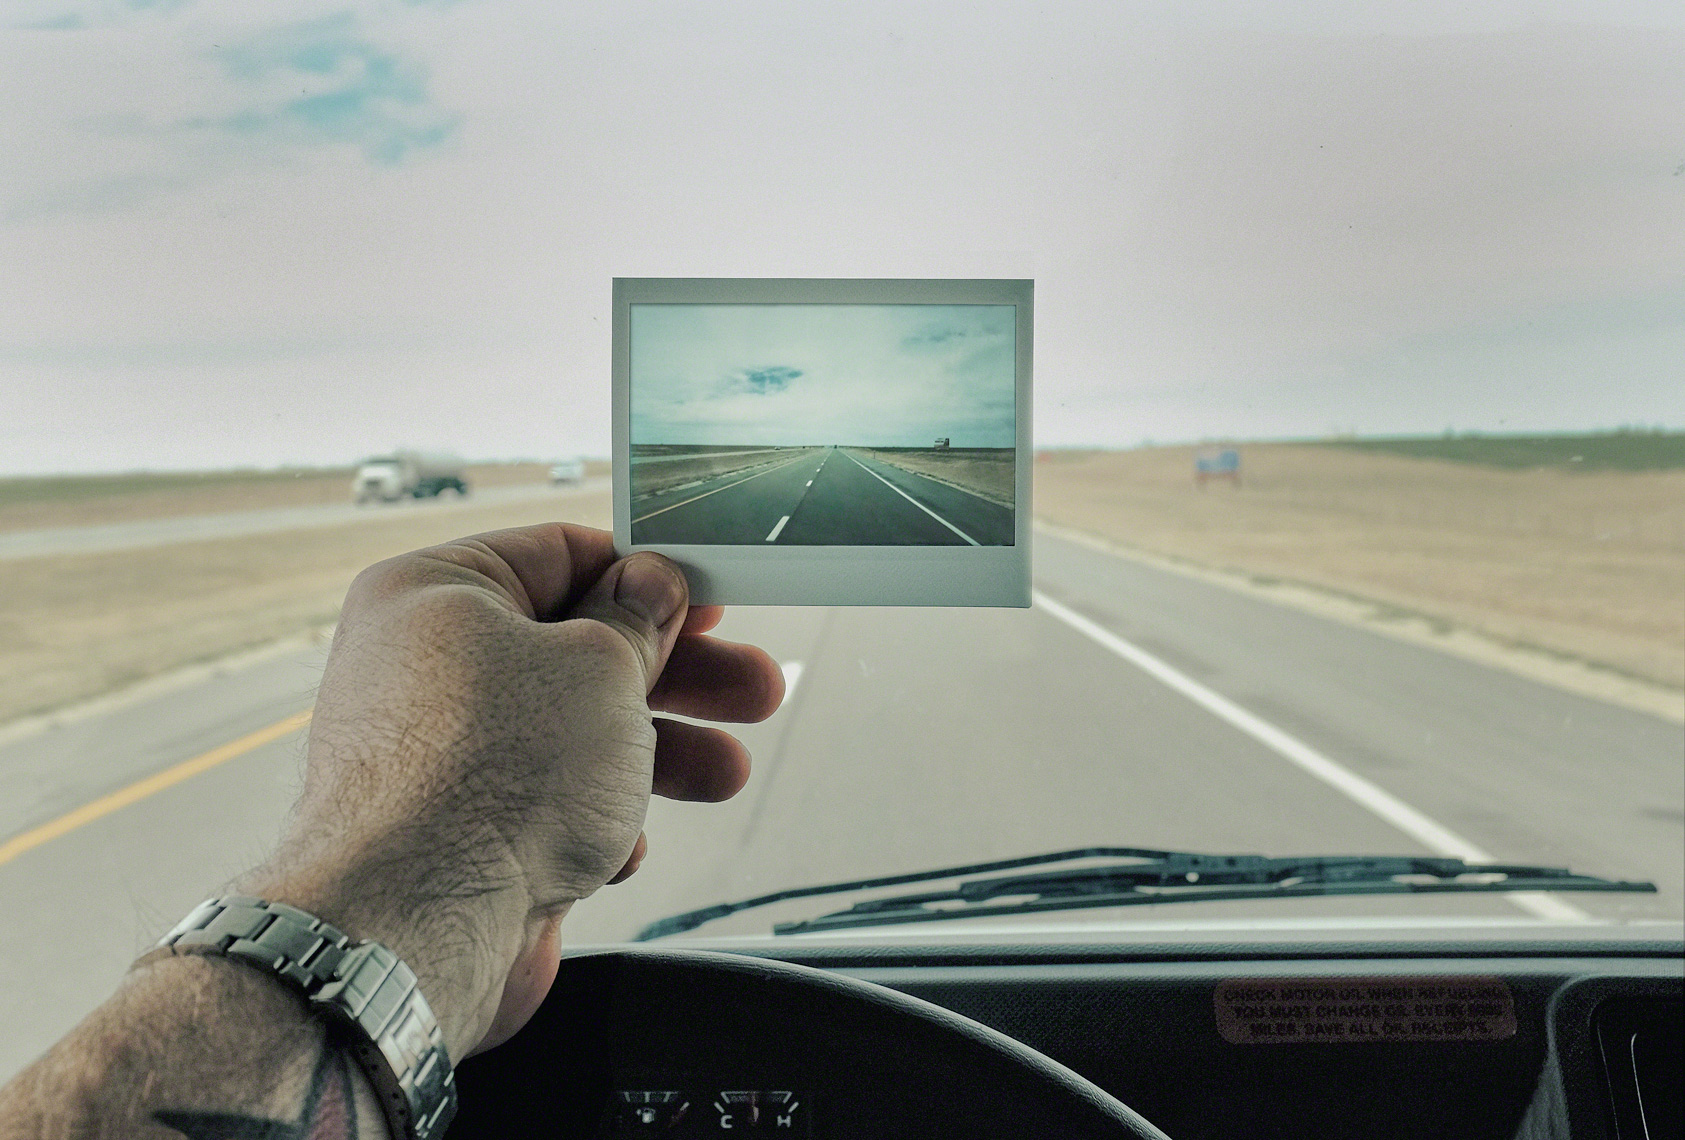 Polaroids and Highways